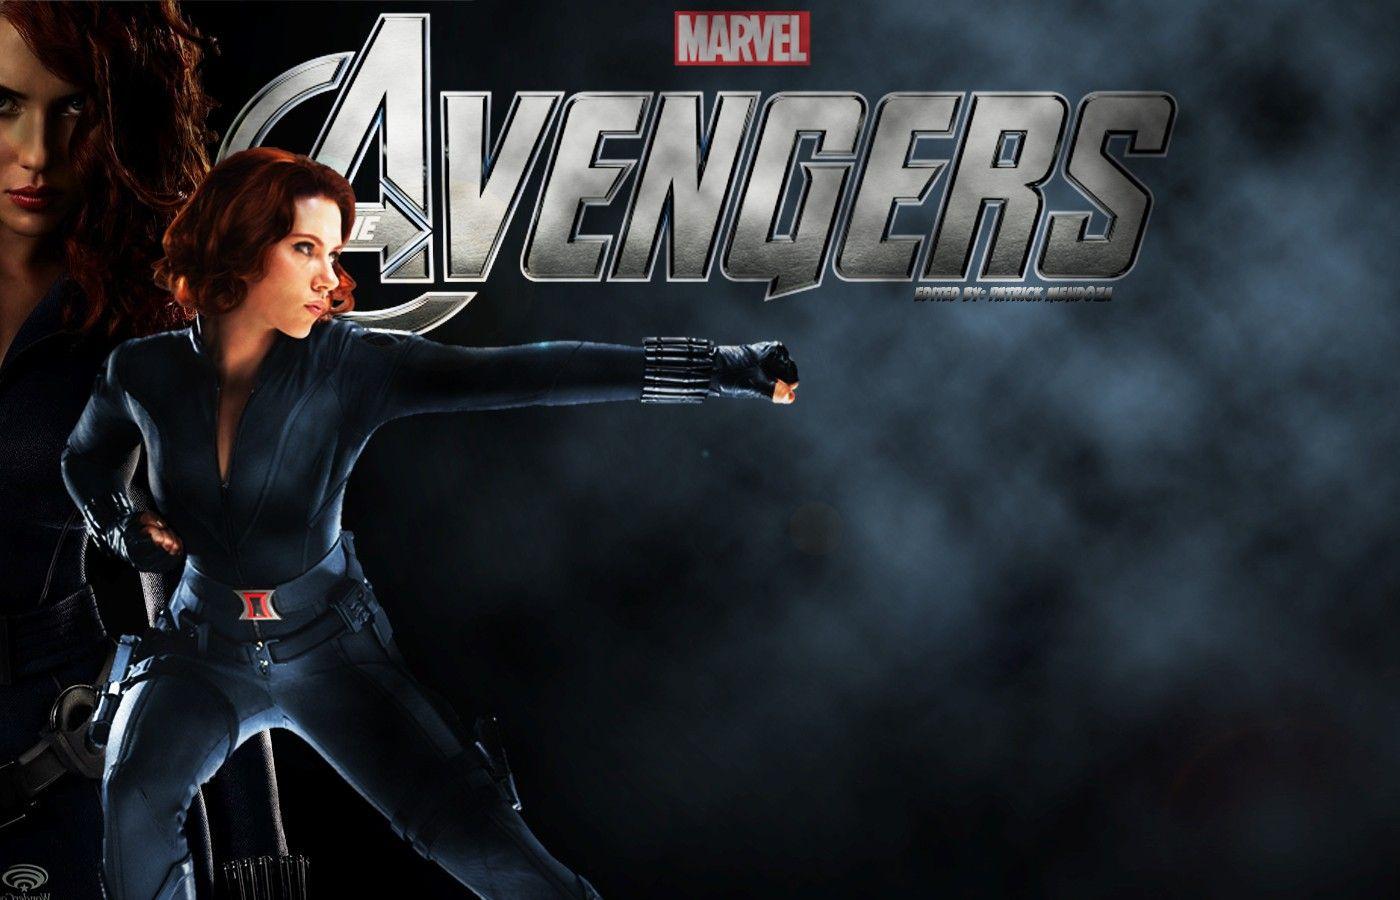 The Avengers Black Widow Wallpaper New the 84 Best Black Widow